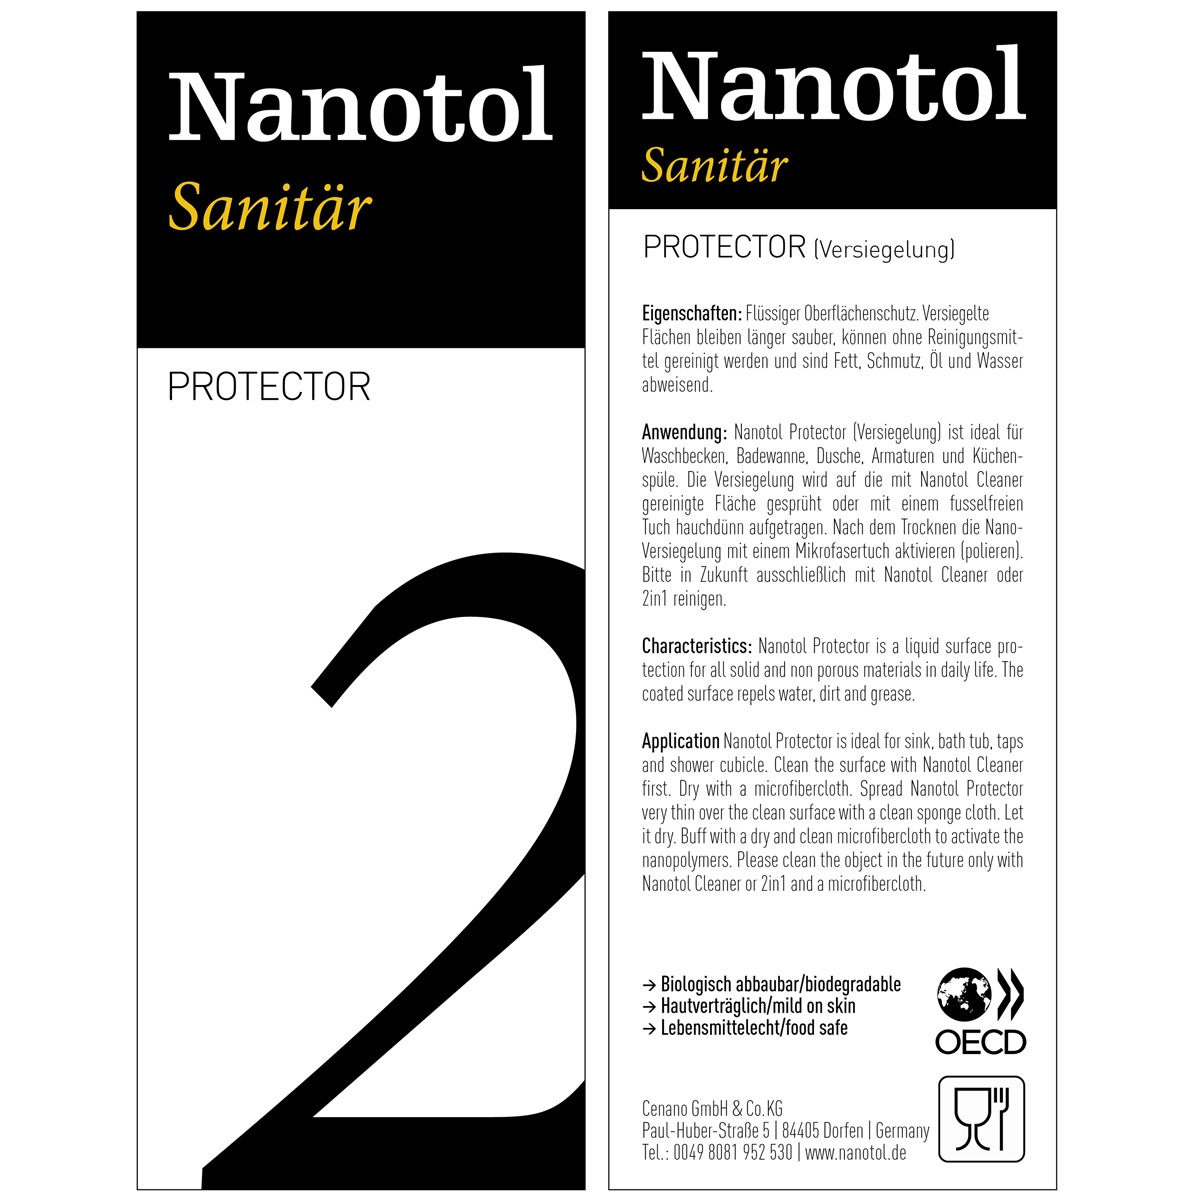 Etikett von Nanotol Sanitär Protector